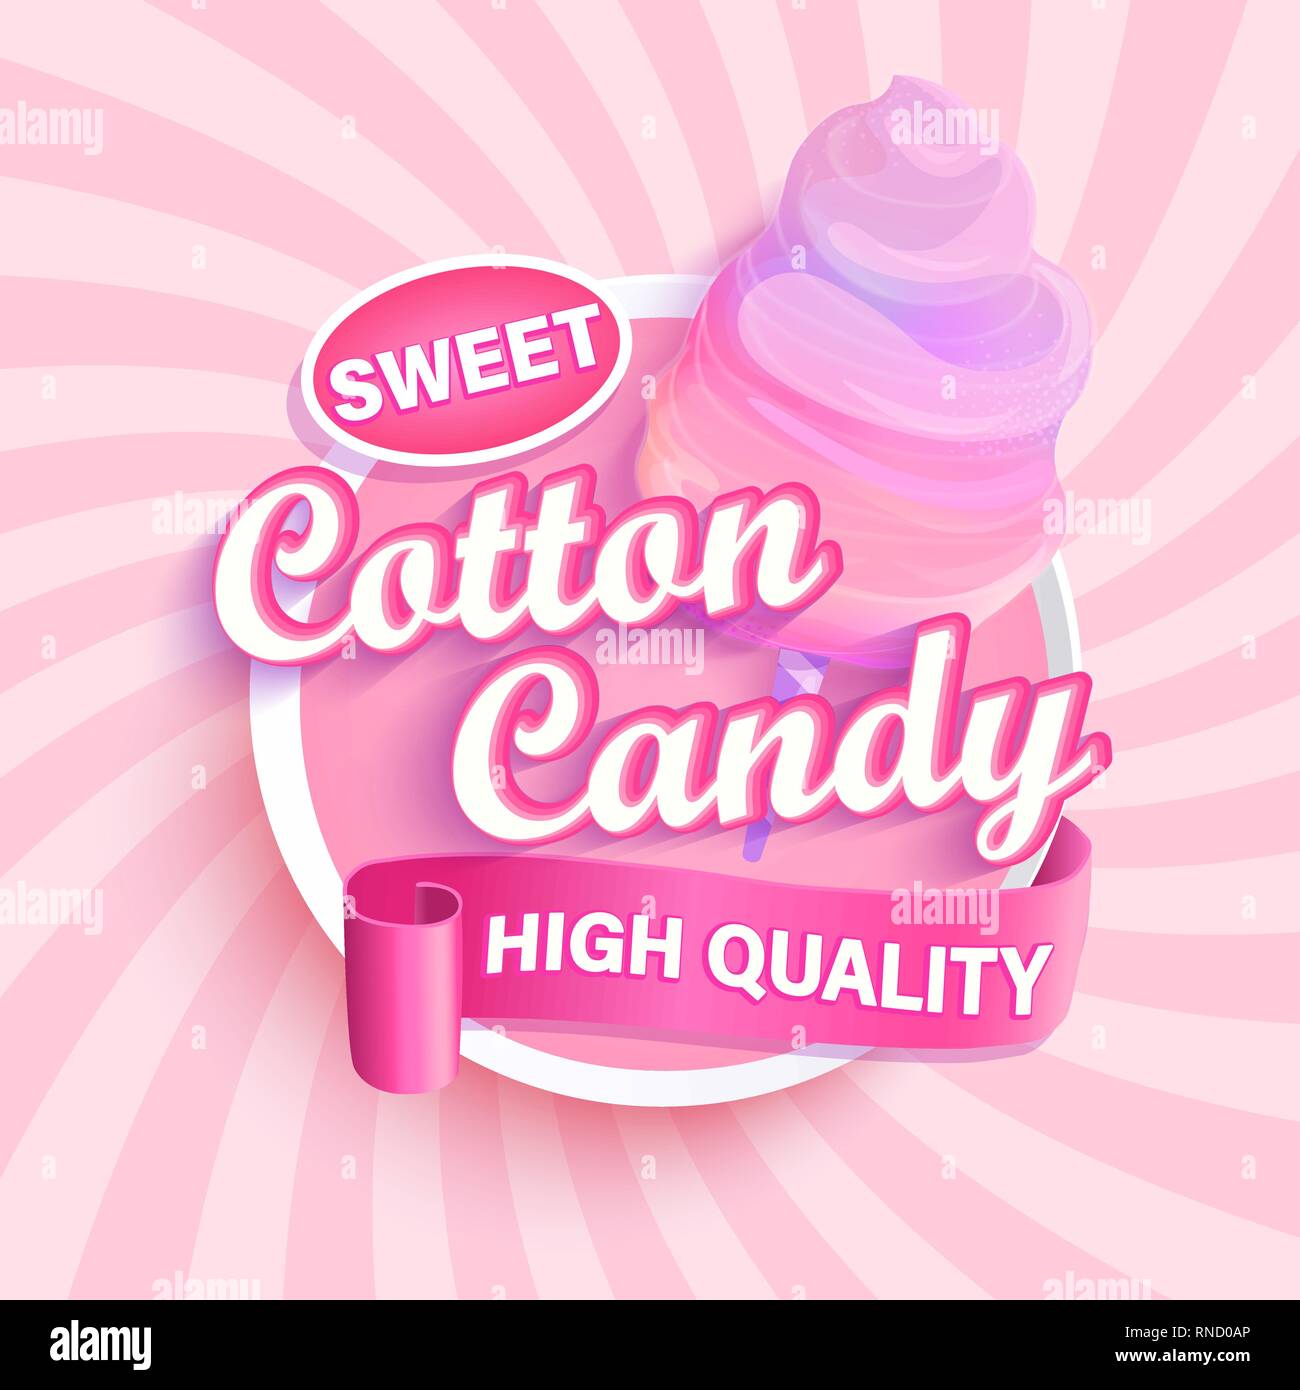 Cotton candy shop logo, label or emblem. Stock Vector